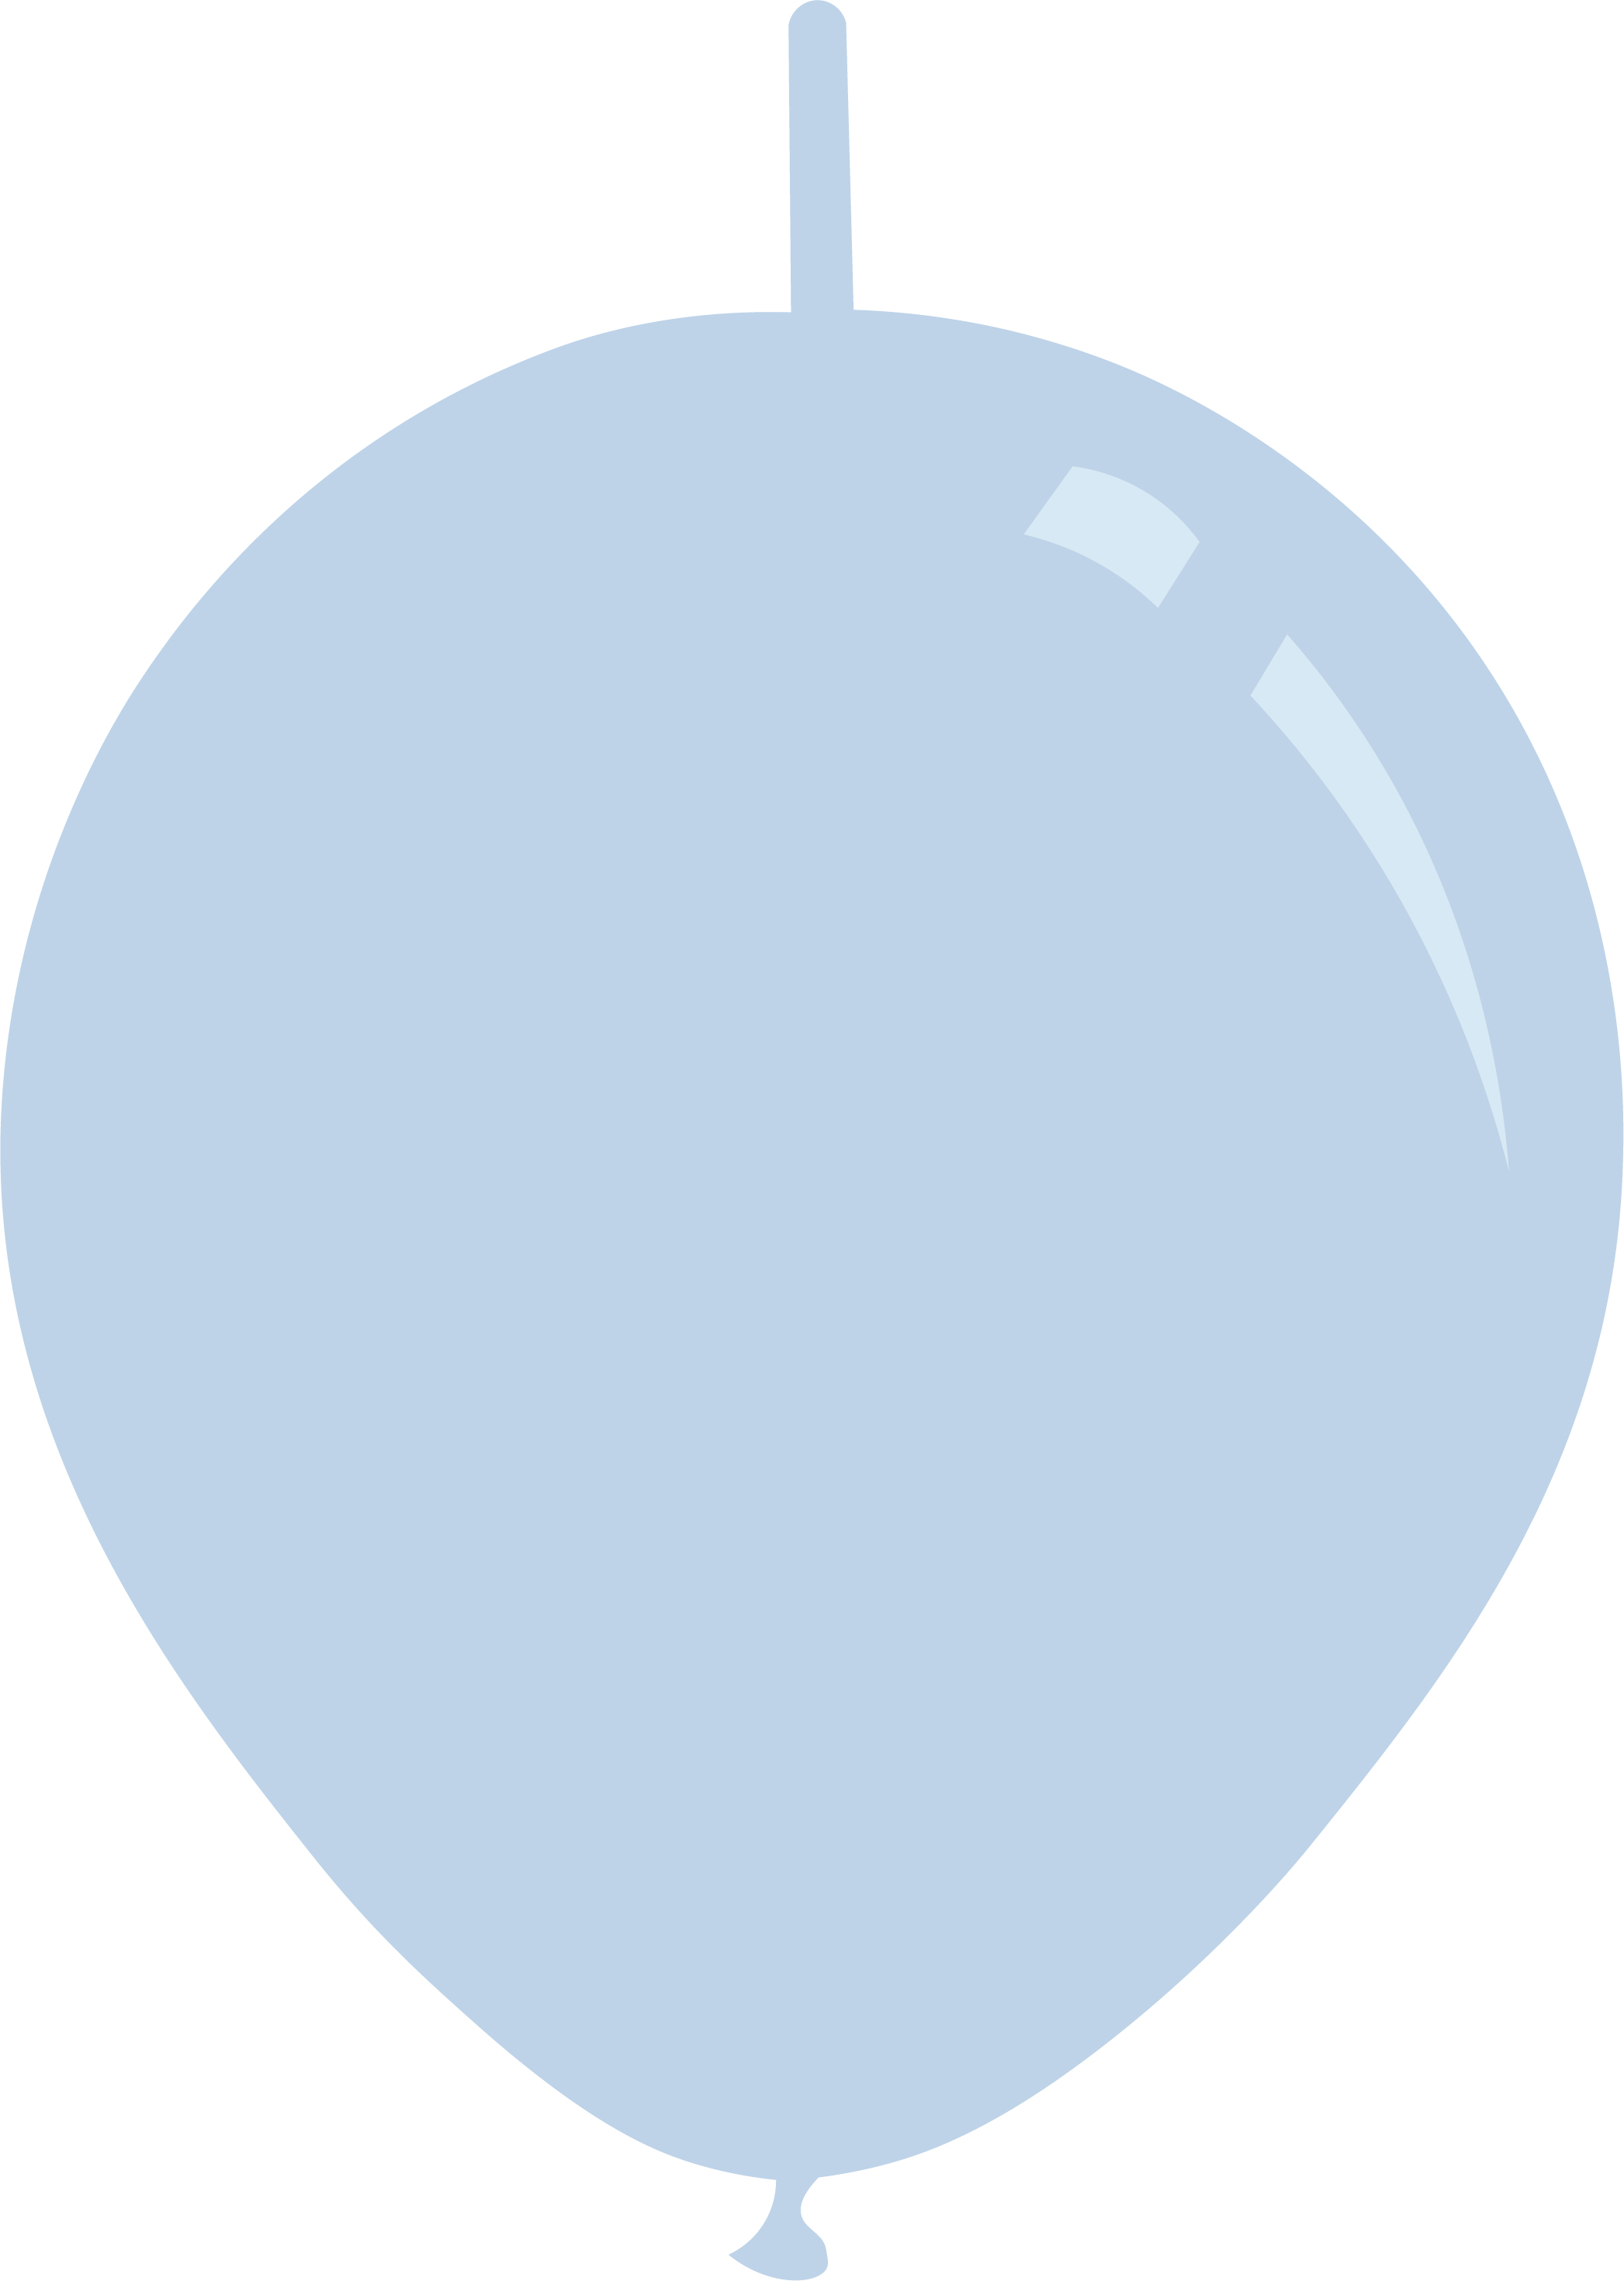 6" Metallic Light Blue Decomex Linking Latex Balloons (100 Per Bag)